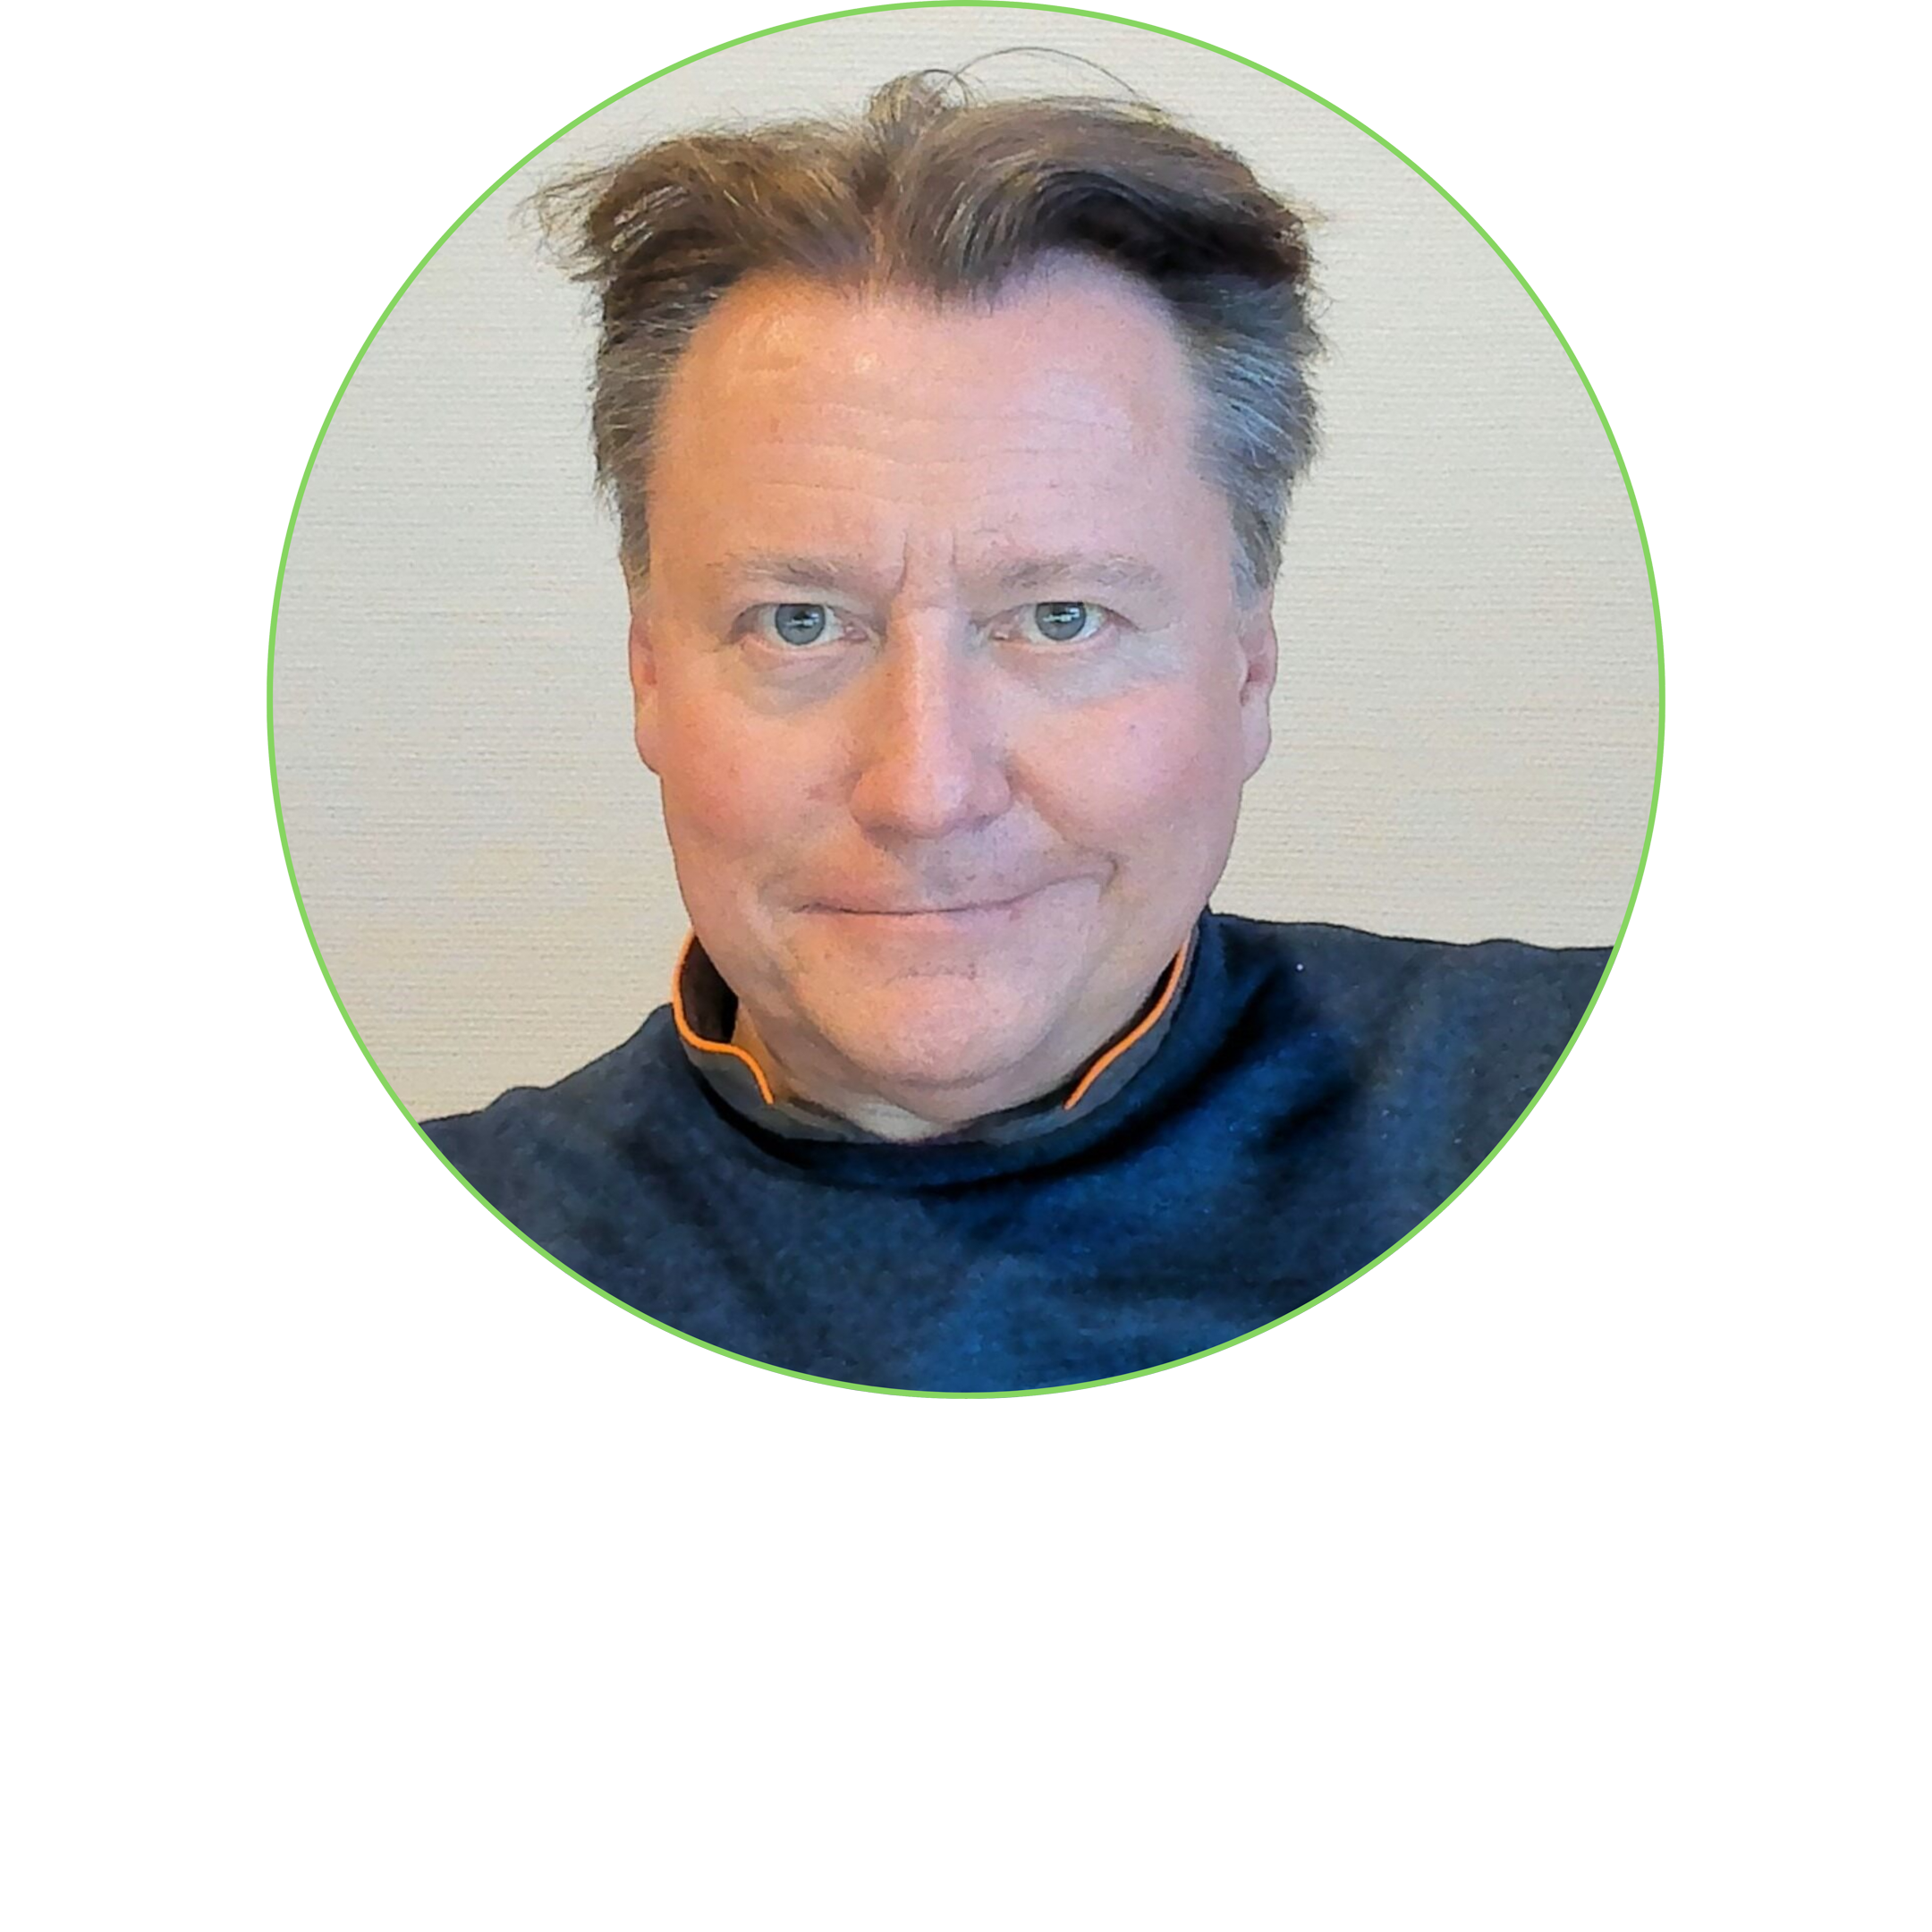 Roche_octavesoft Gmbh Philipp Sutter logo